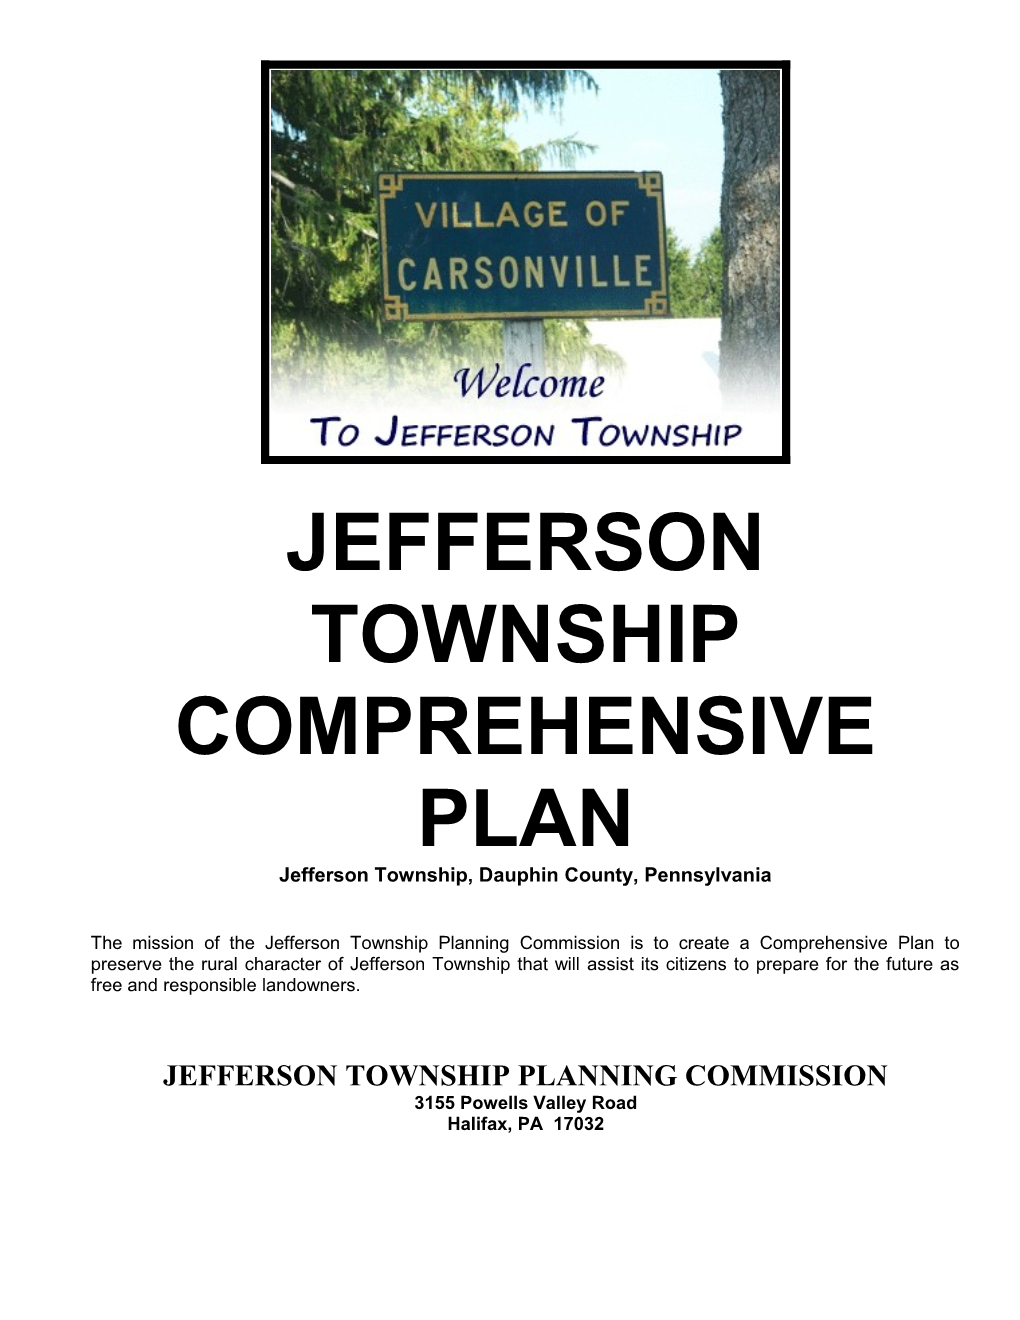 Jeffersontownship, Dauphin County, Pennsylvania